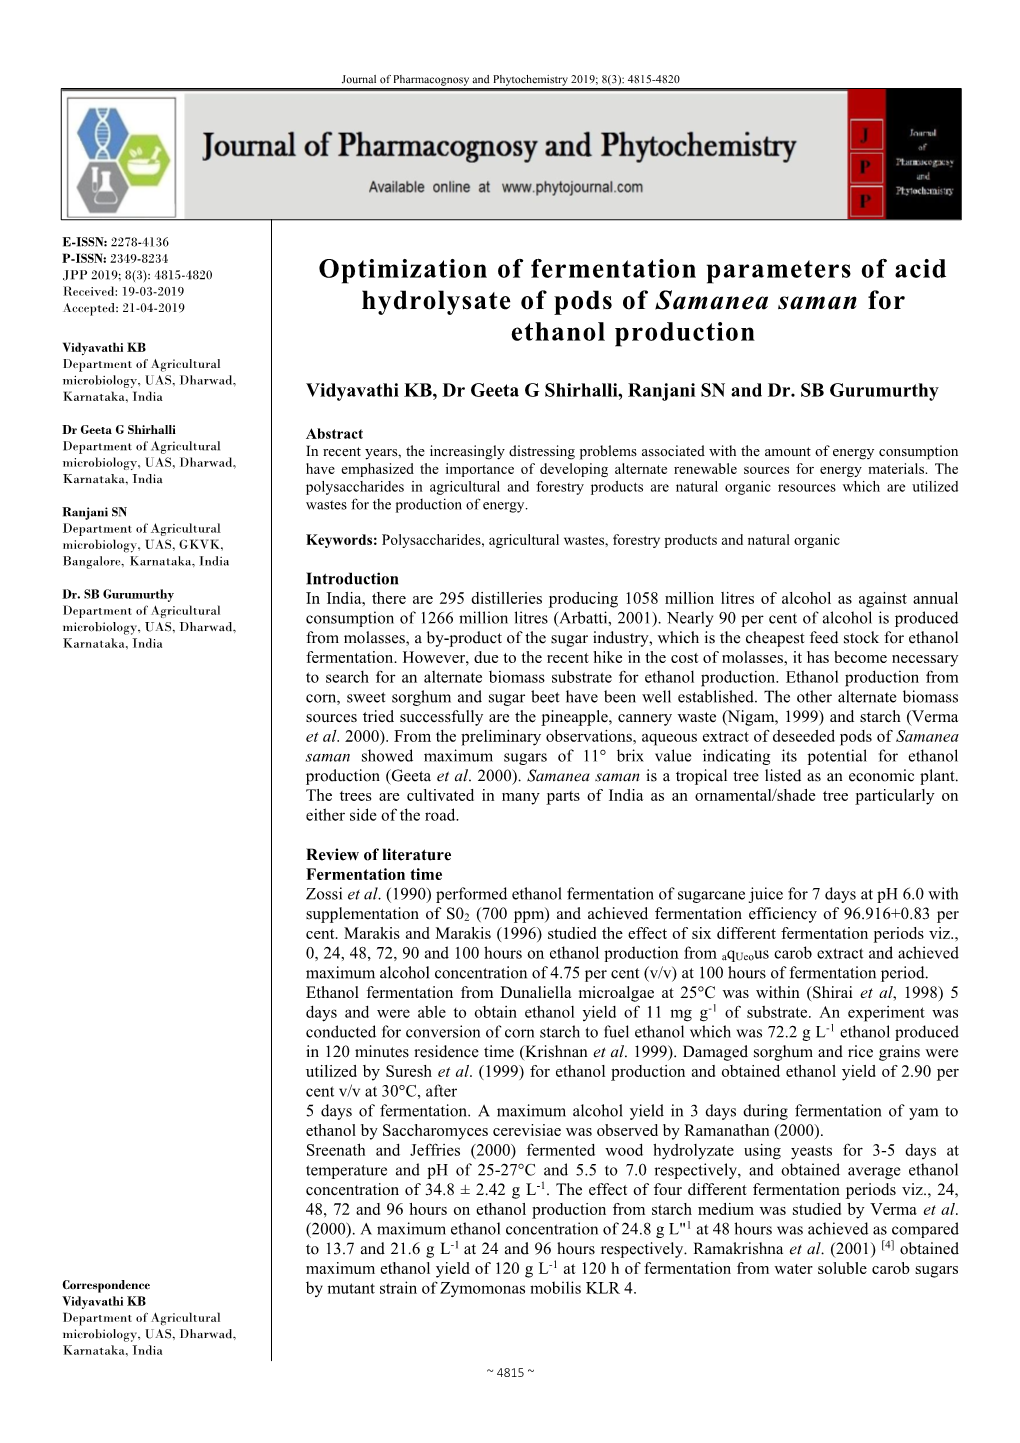 Optimization of Fermentation Parameters of Acid Hydrolysate Of